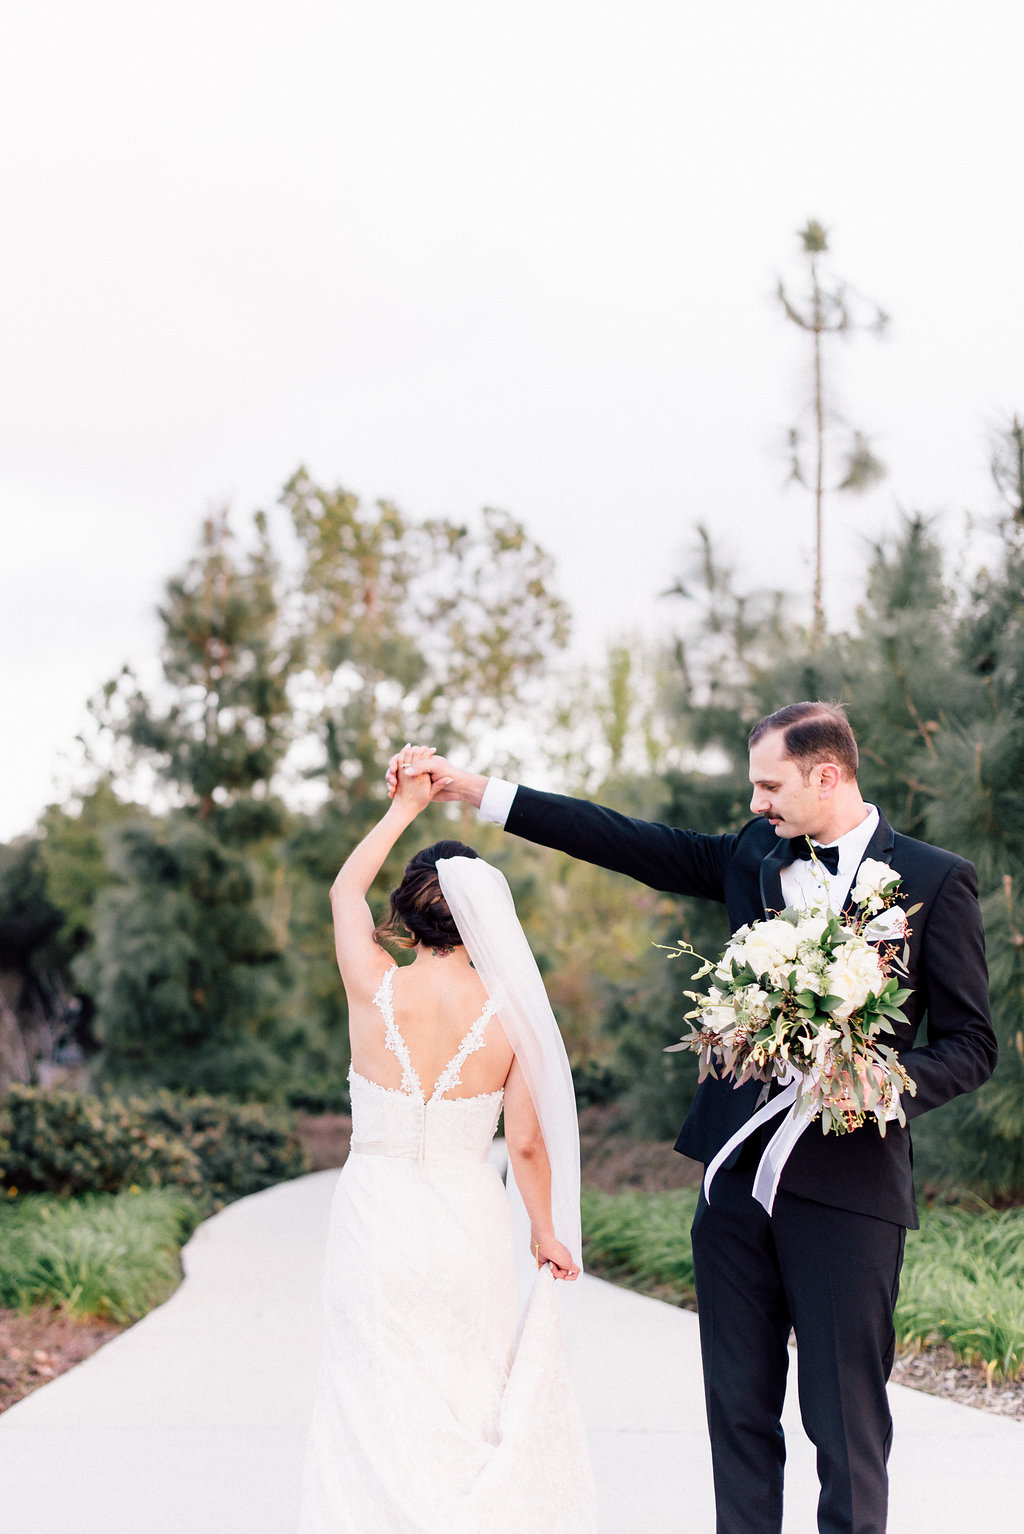 Thousand Oaks Garden Wedding Venue Los Robles Greens - The Overwhelmed Bride Wedding Blog